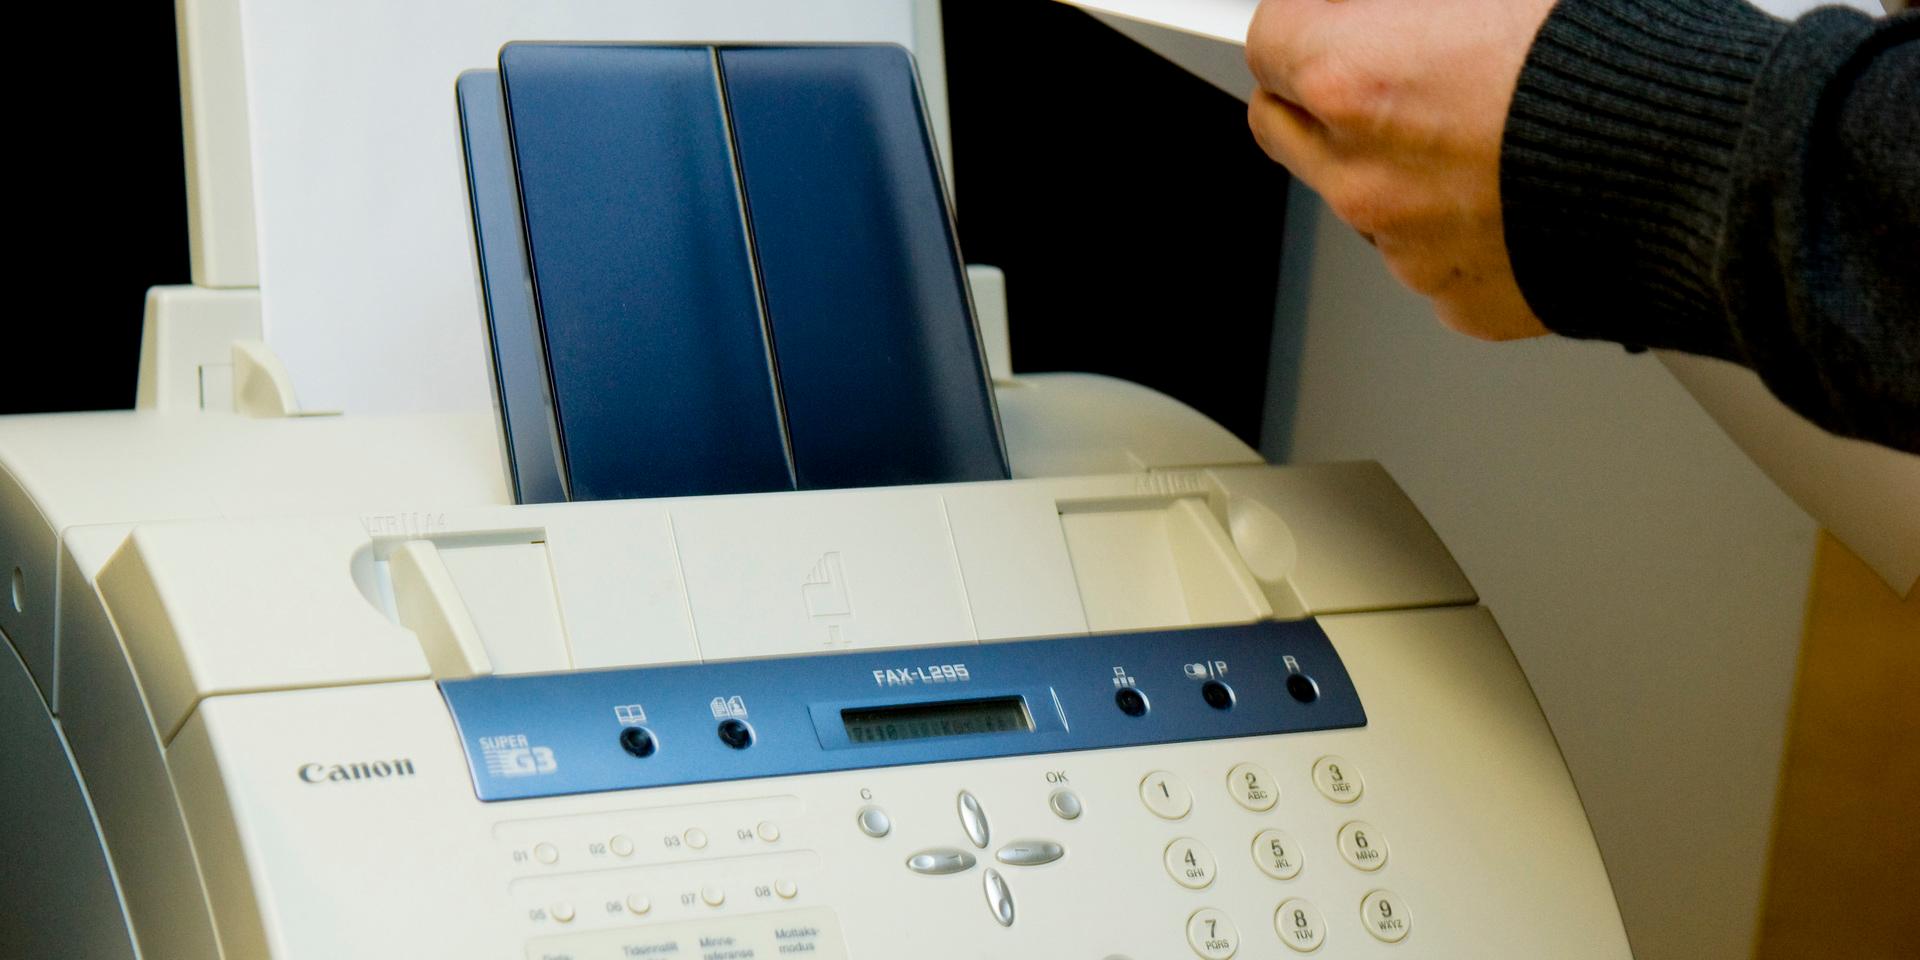 Oslo  20091116.
Illustrasjonsbilde: faks, fax, telefax. Telefaksmaskin.
Foto: Berit Roald / NTB